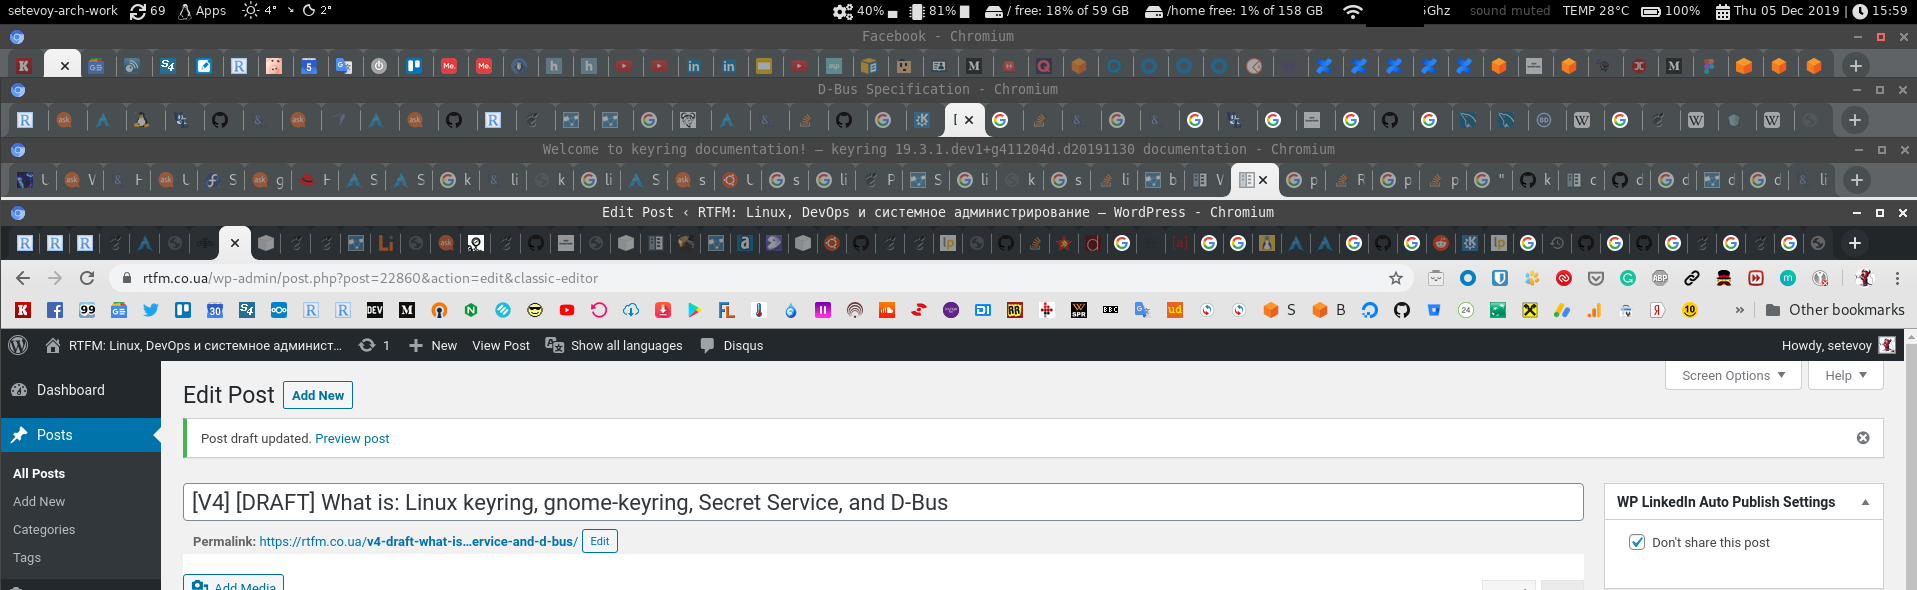 What Are Linux Keyring Gnome Keyring Secret Service D Bus